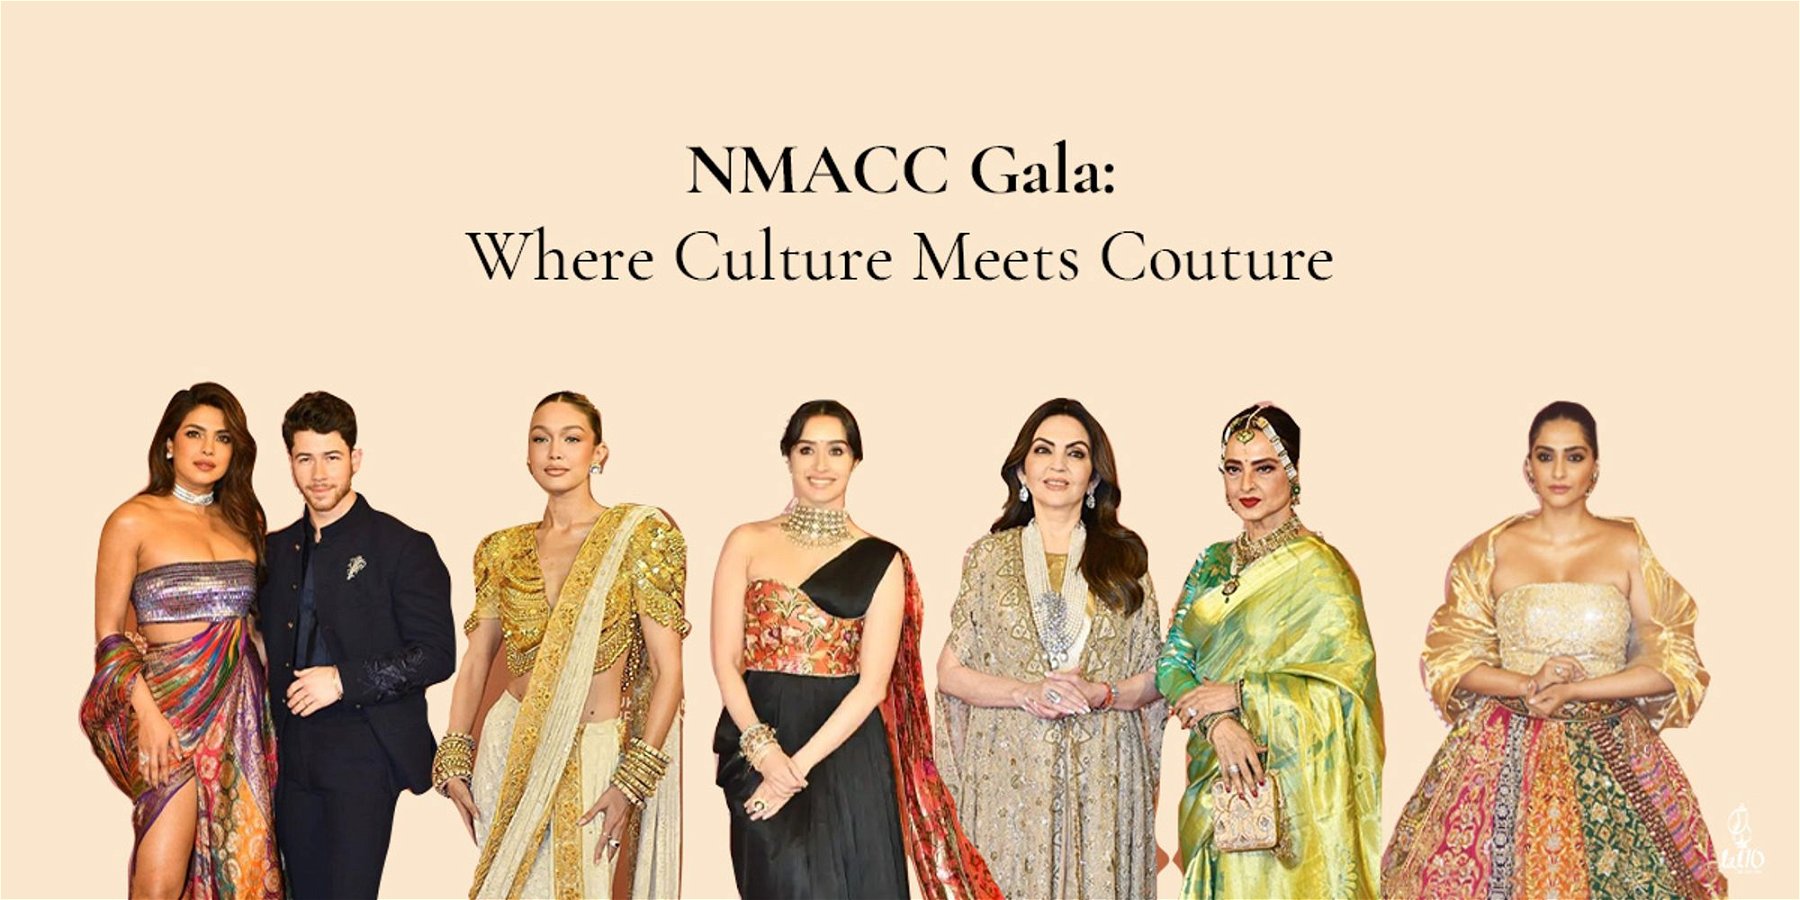 NMACC Gala: Where Culture Meets Couture